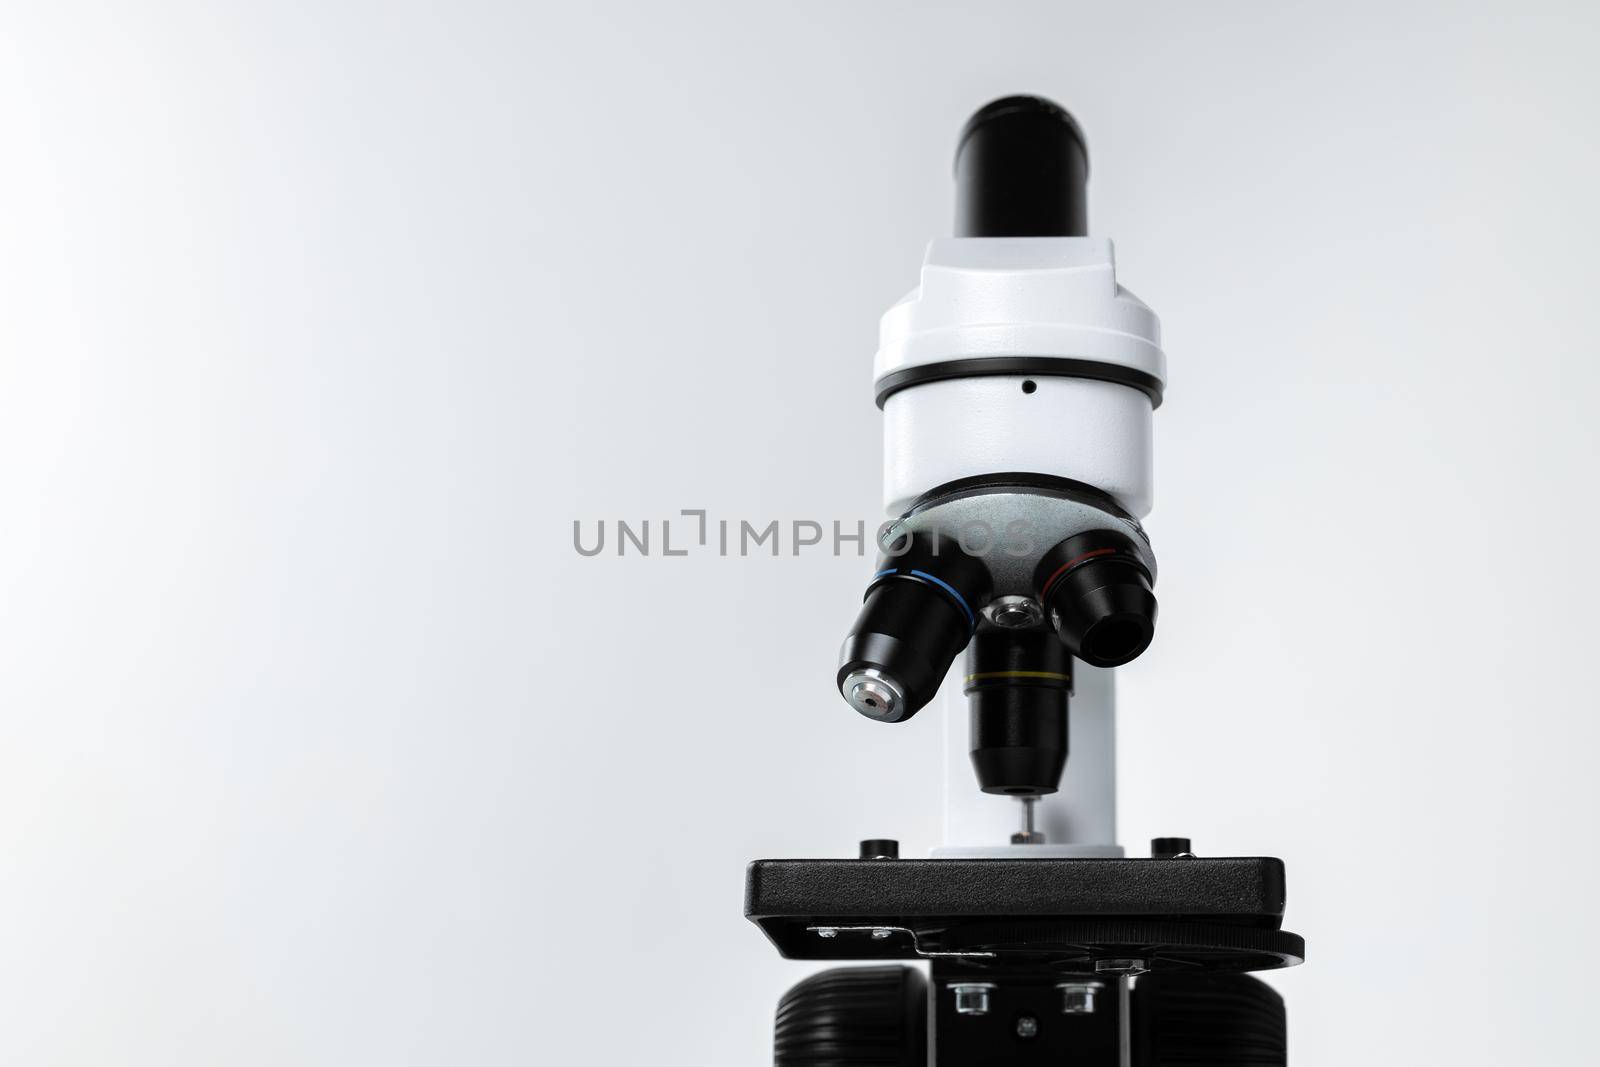 Mo0dern white laboratory microscope on white background, close up